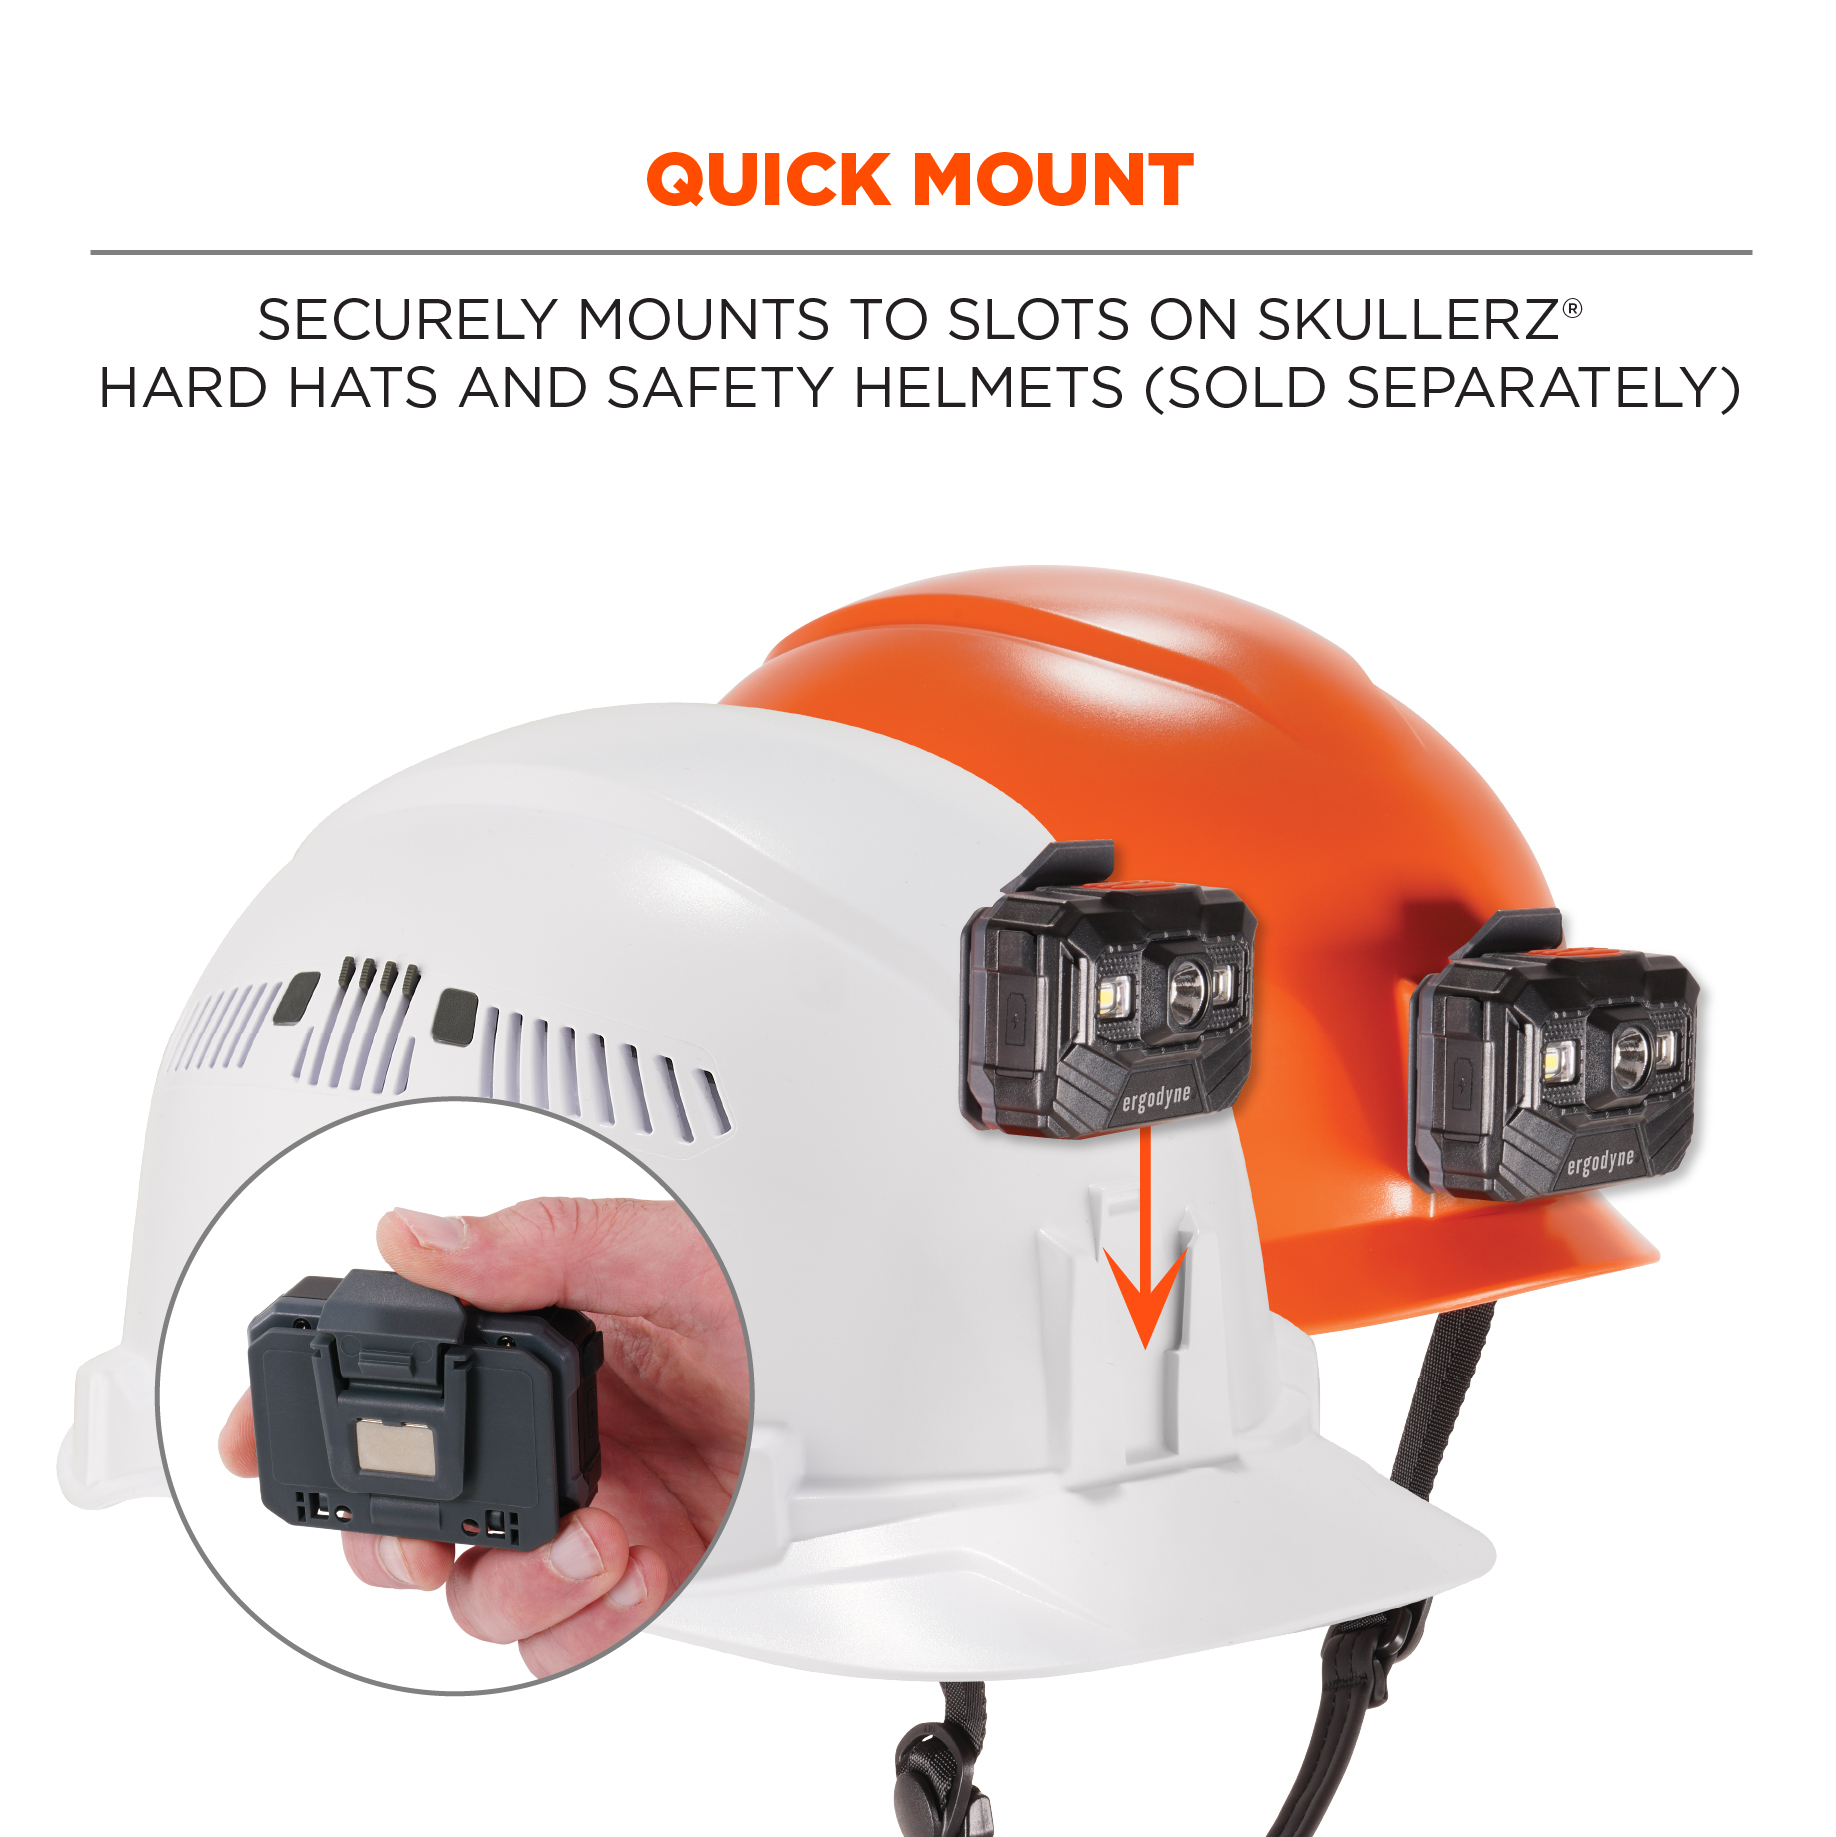 Ergodyne Skullerz 8987 Universal Rechargeable Hard Hat Light from Columbia Safety